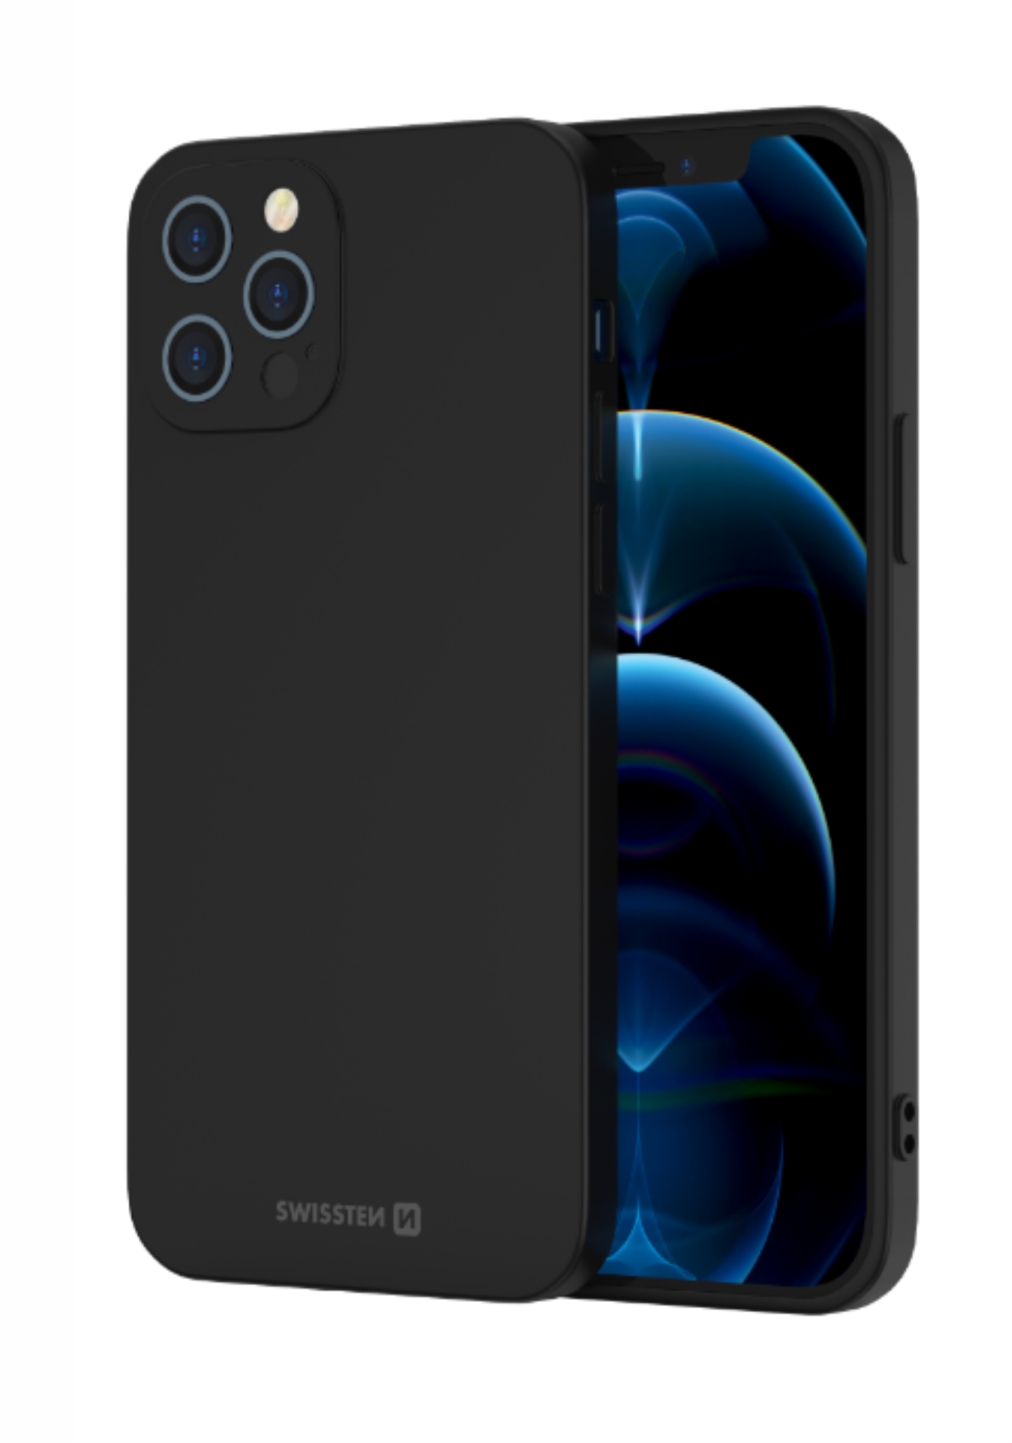 Swissten Samsung G980F Galaxy S20/G981F Galaxy S20 5G Soft Joy Case - 34500162 - Black